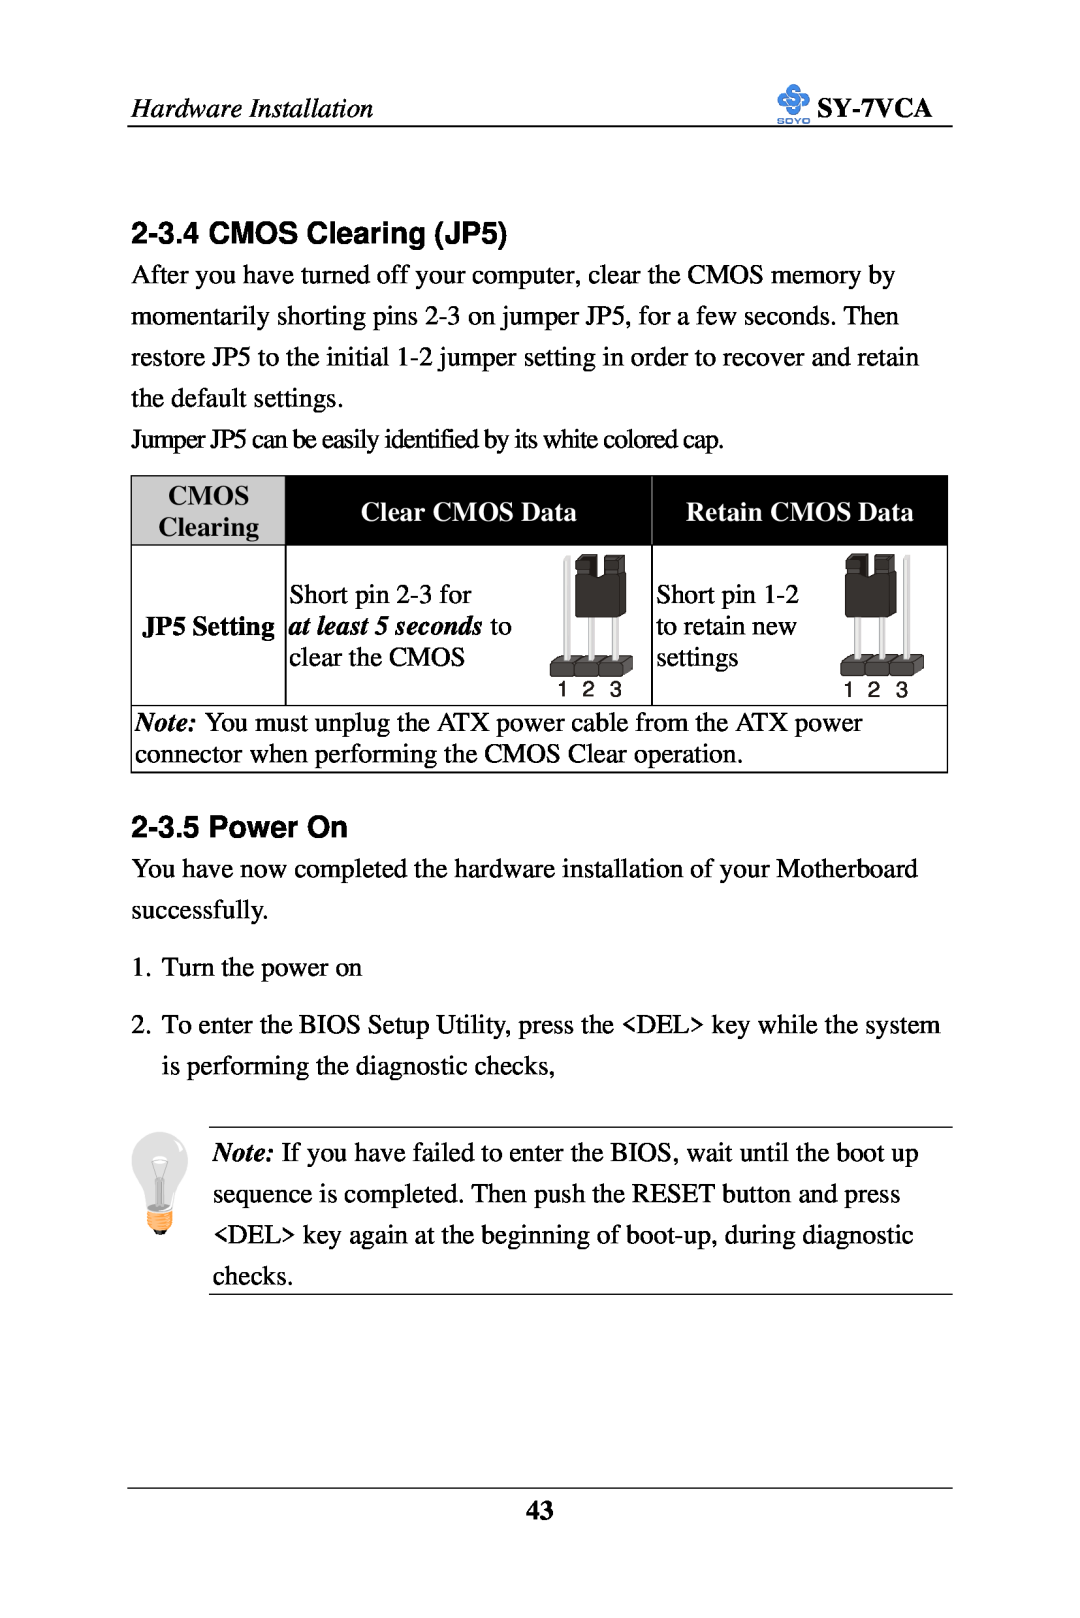 SOYO SY-7VCA user manual CMOS Clearing JP5, Power On, Clear CMOS Data Retain CMOS Data, Cmos, JP5 Setting 